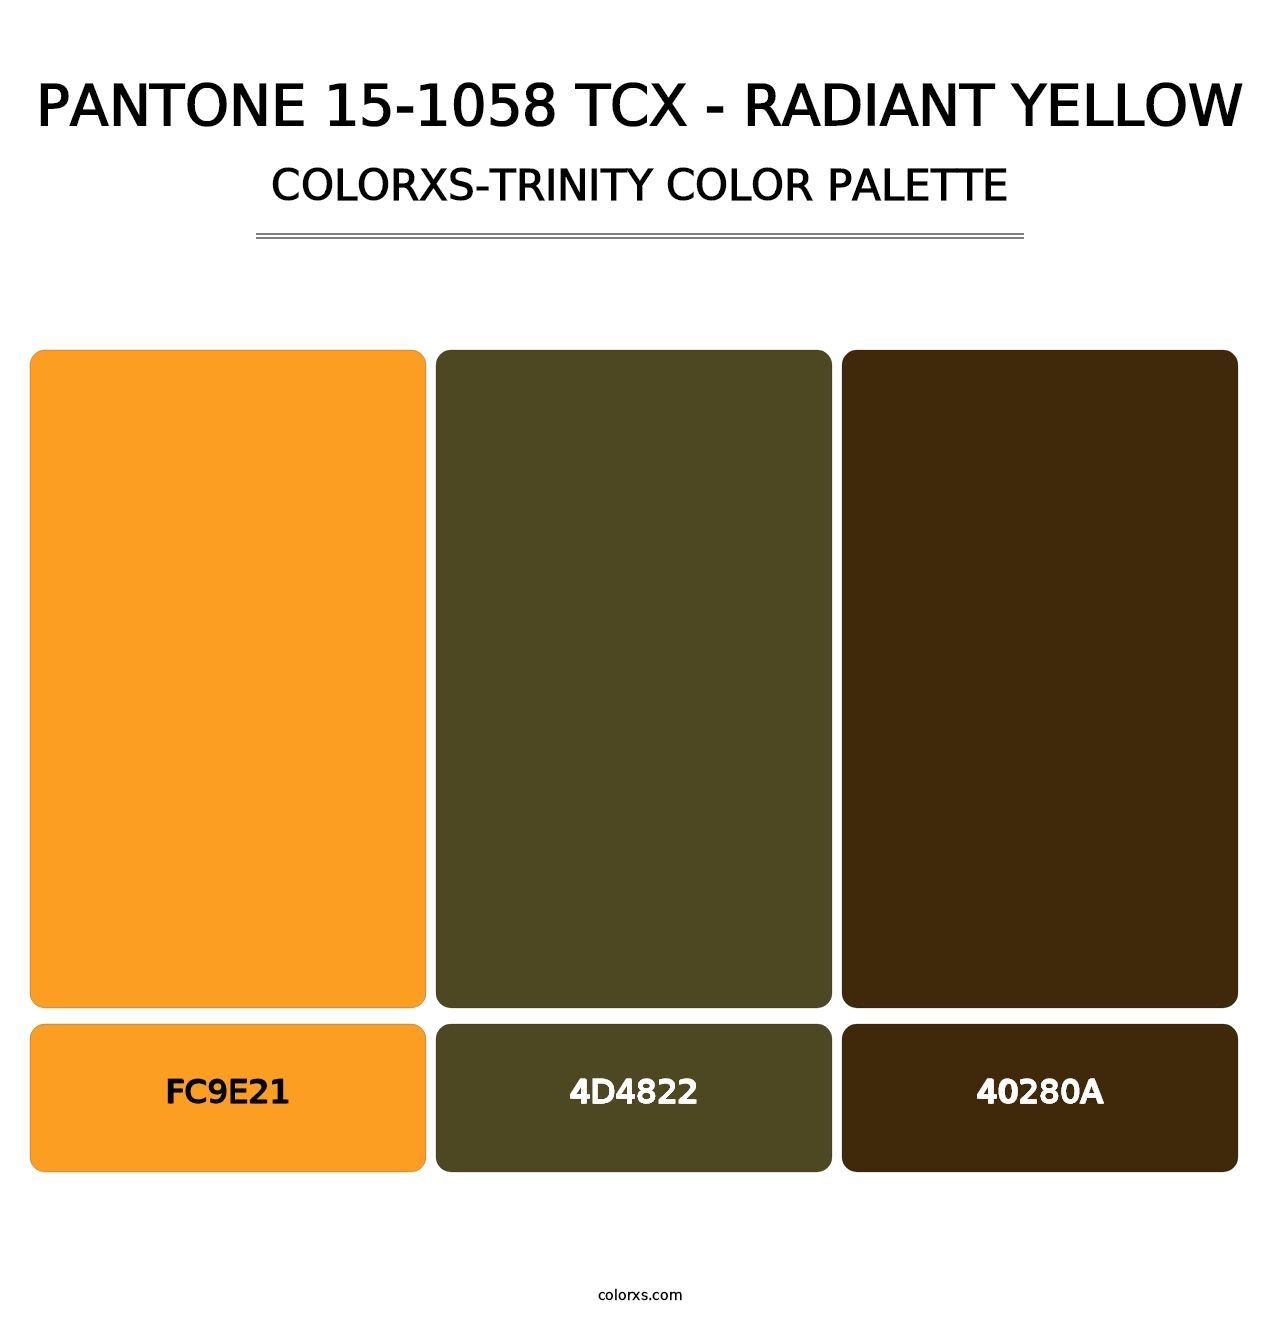 PANTONE 15-1058 TCX - Radiant Yellow - Colorxs Trinity Palette